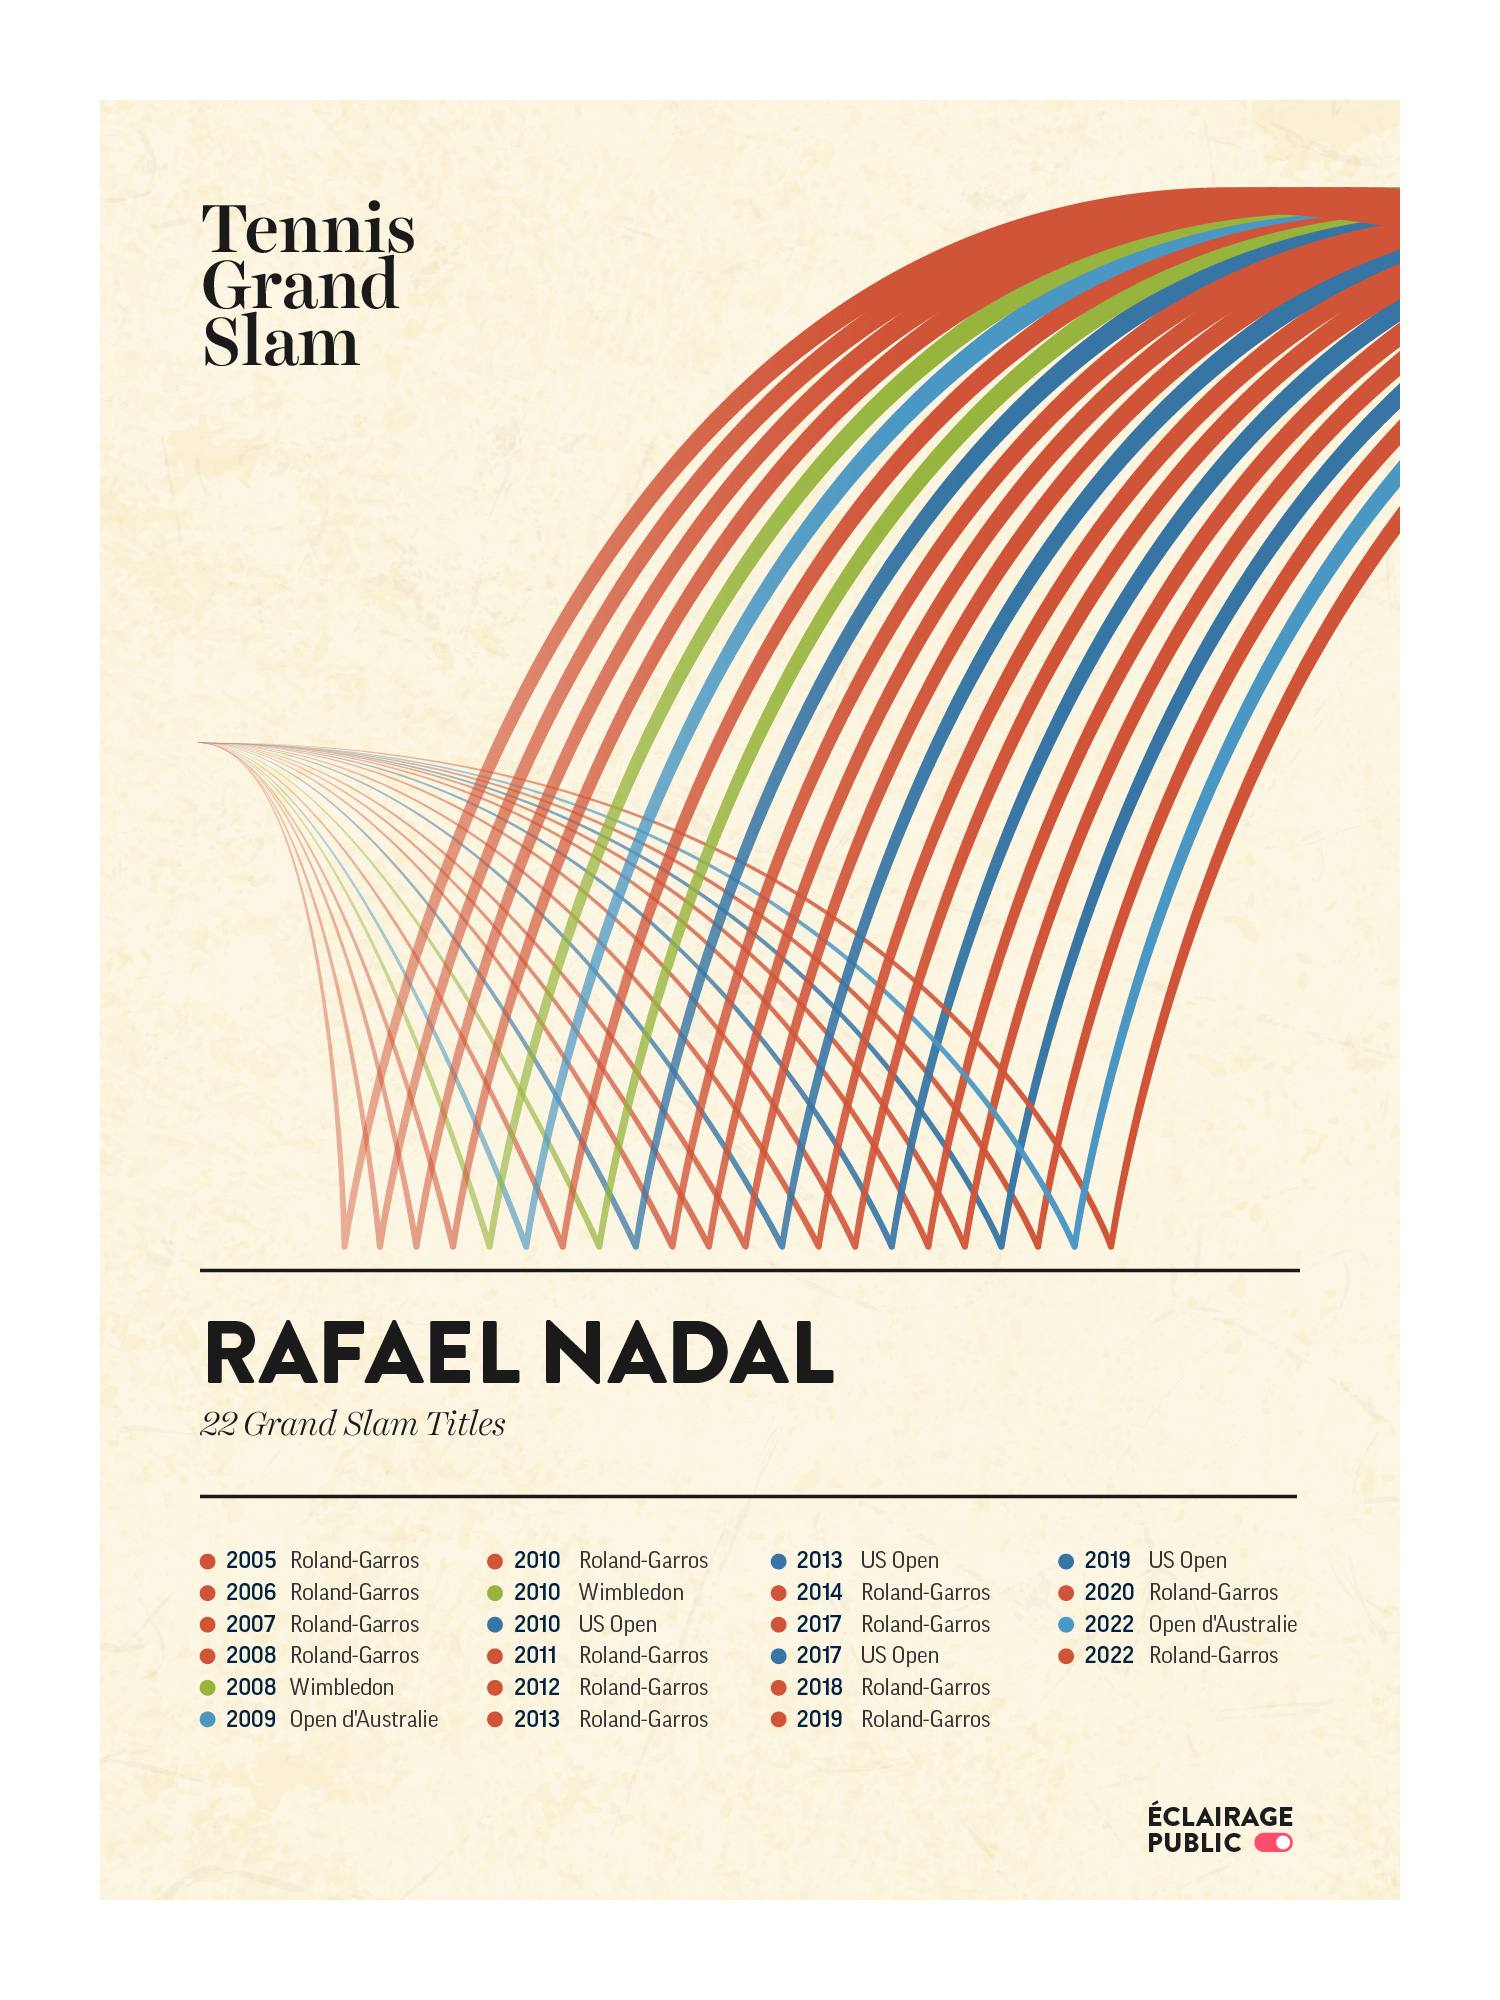 Tennis-Grand-Slam-Rafael-Nadal-ECLAIRAGE-PUBLIC